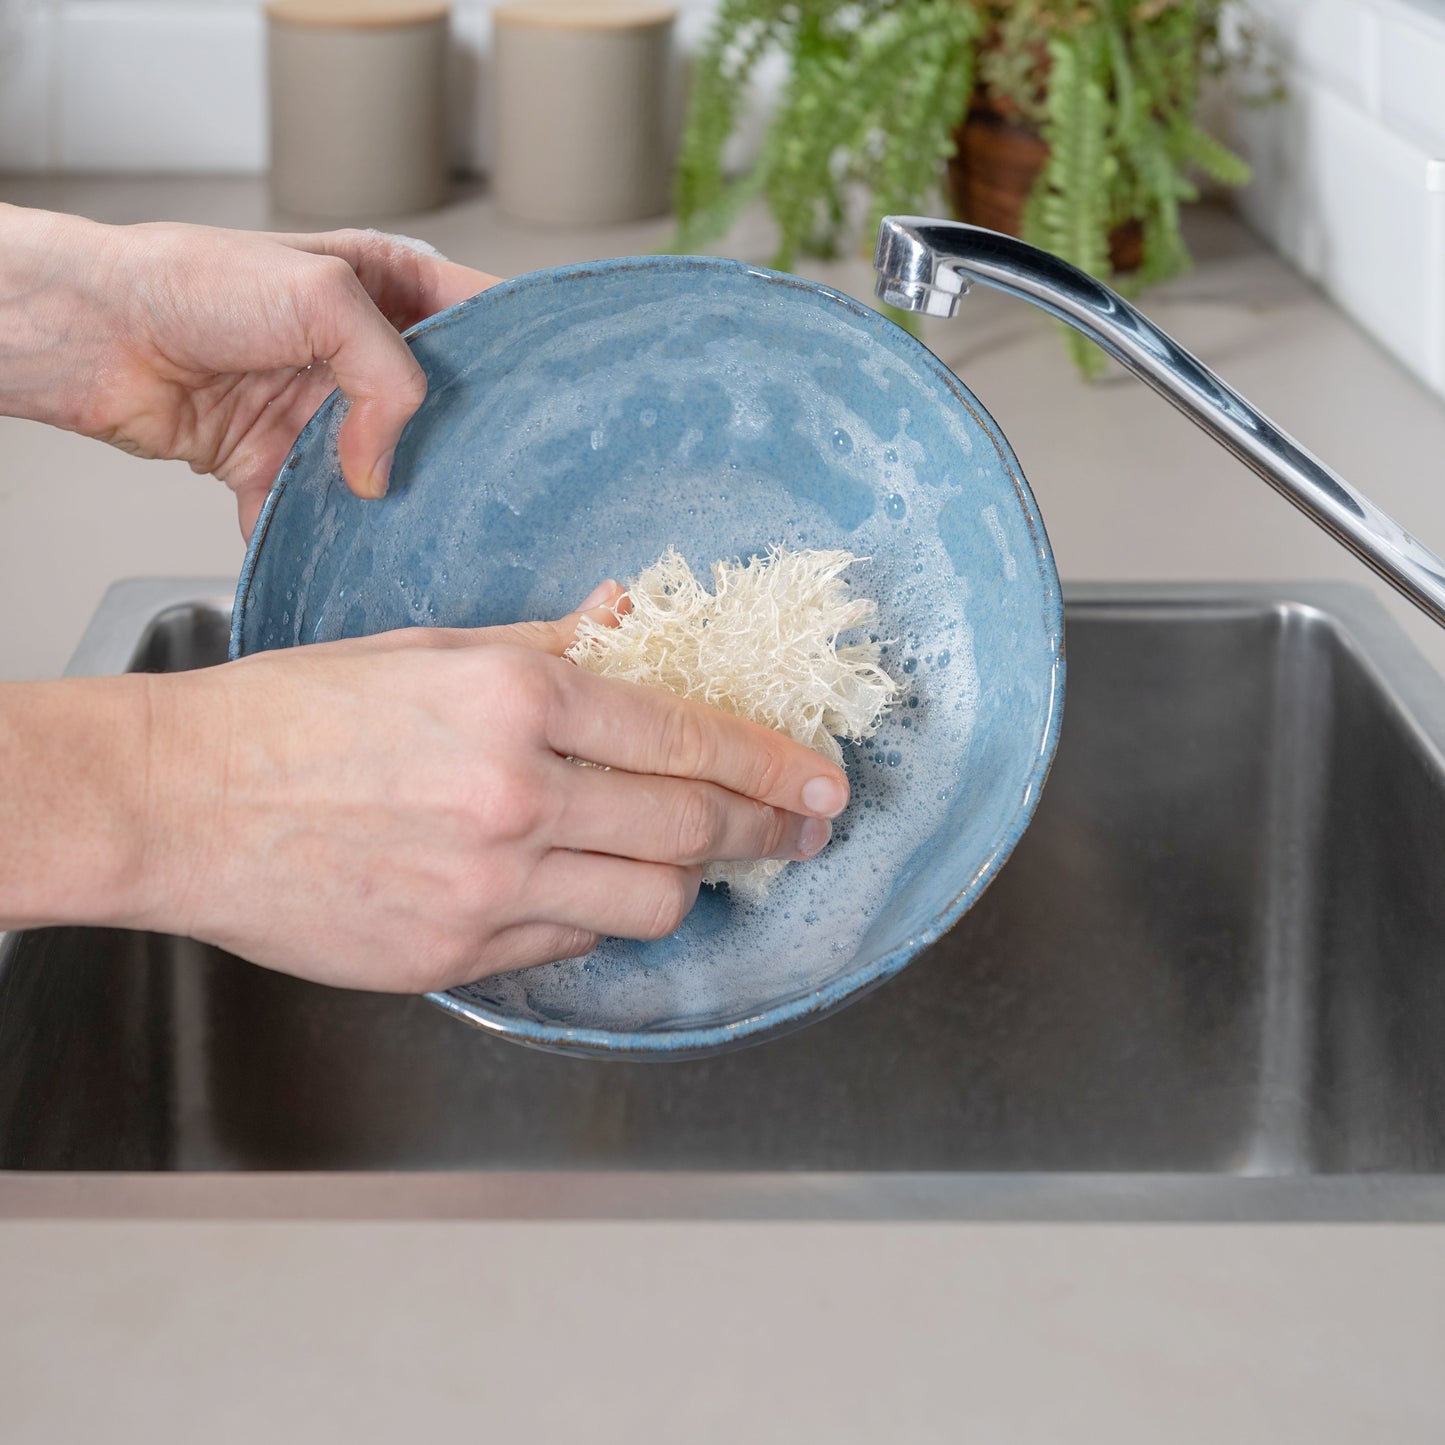 loofah kitchen sponge being showed washing a dish plastic-free